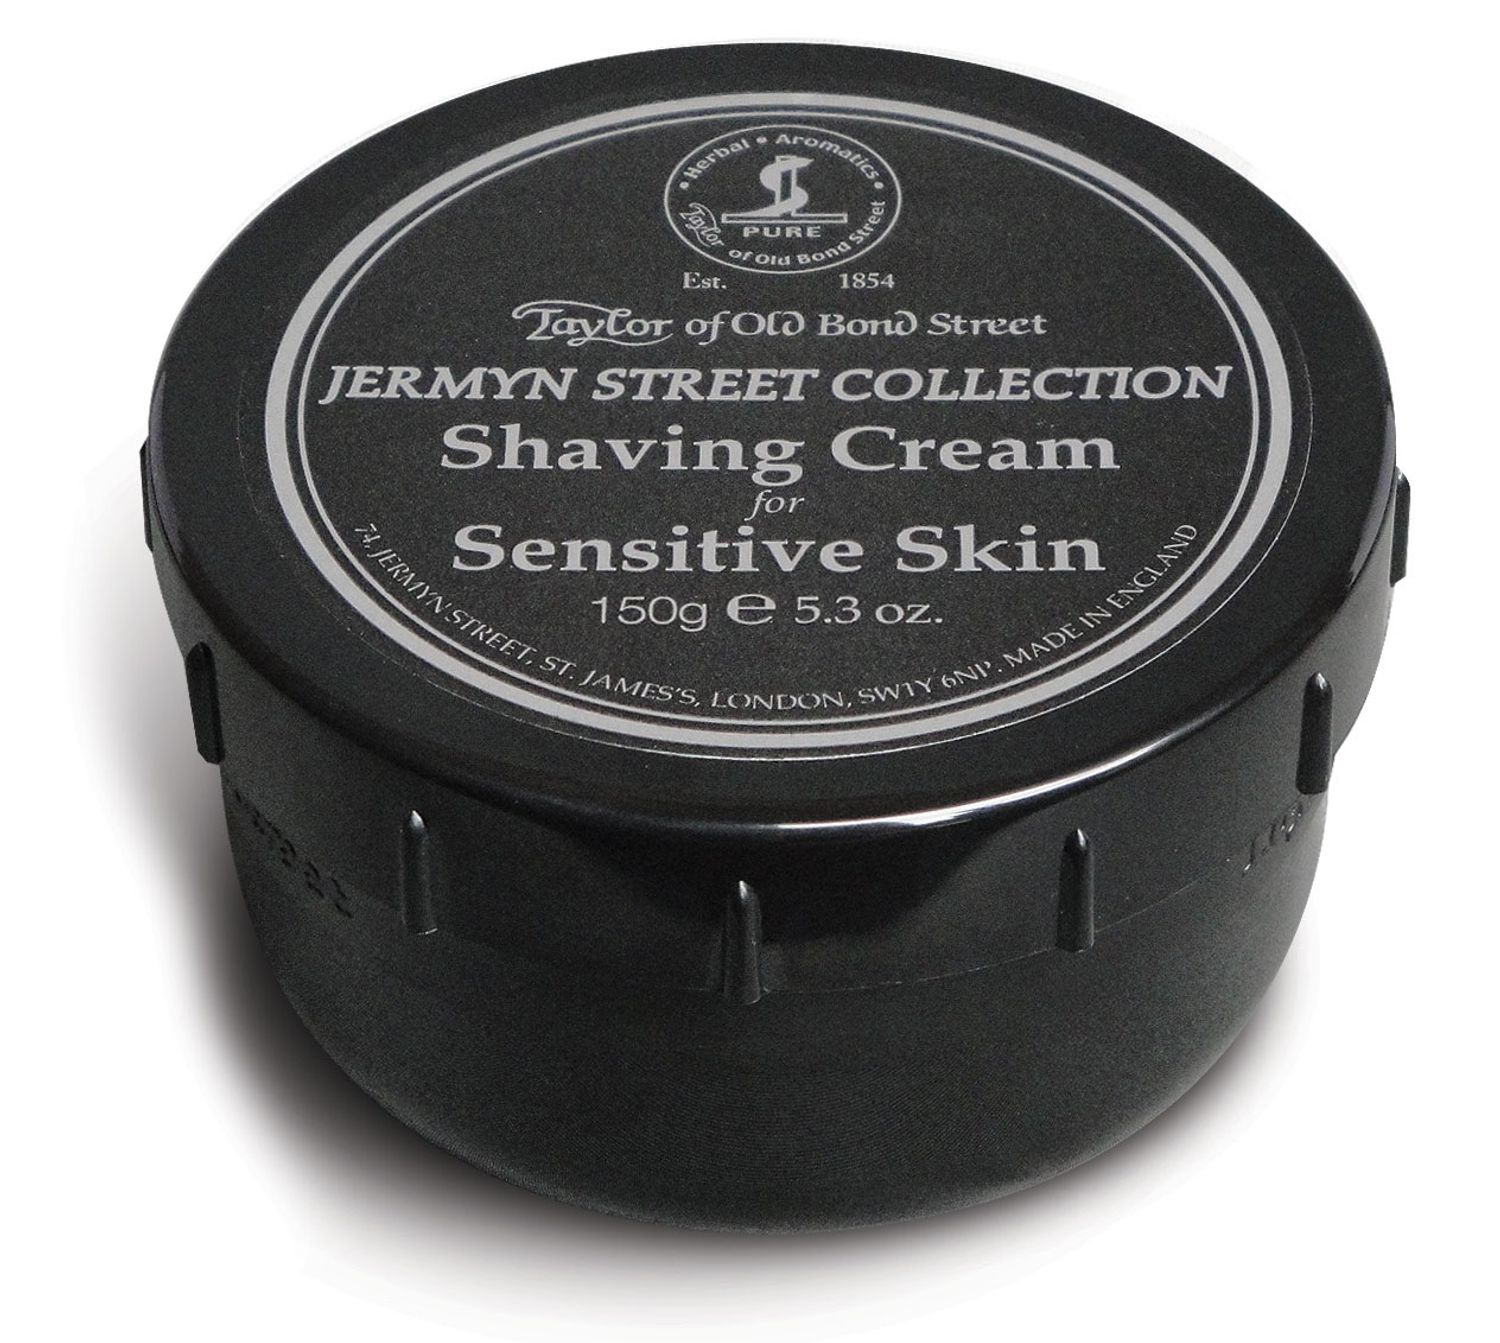 oz 01014 - of Shaving Sensitive Bond - Street Taylor Street (150g) Cream Jermyn Old KnifeCenter for Skin 5.3 Collection